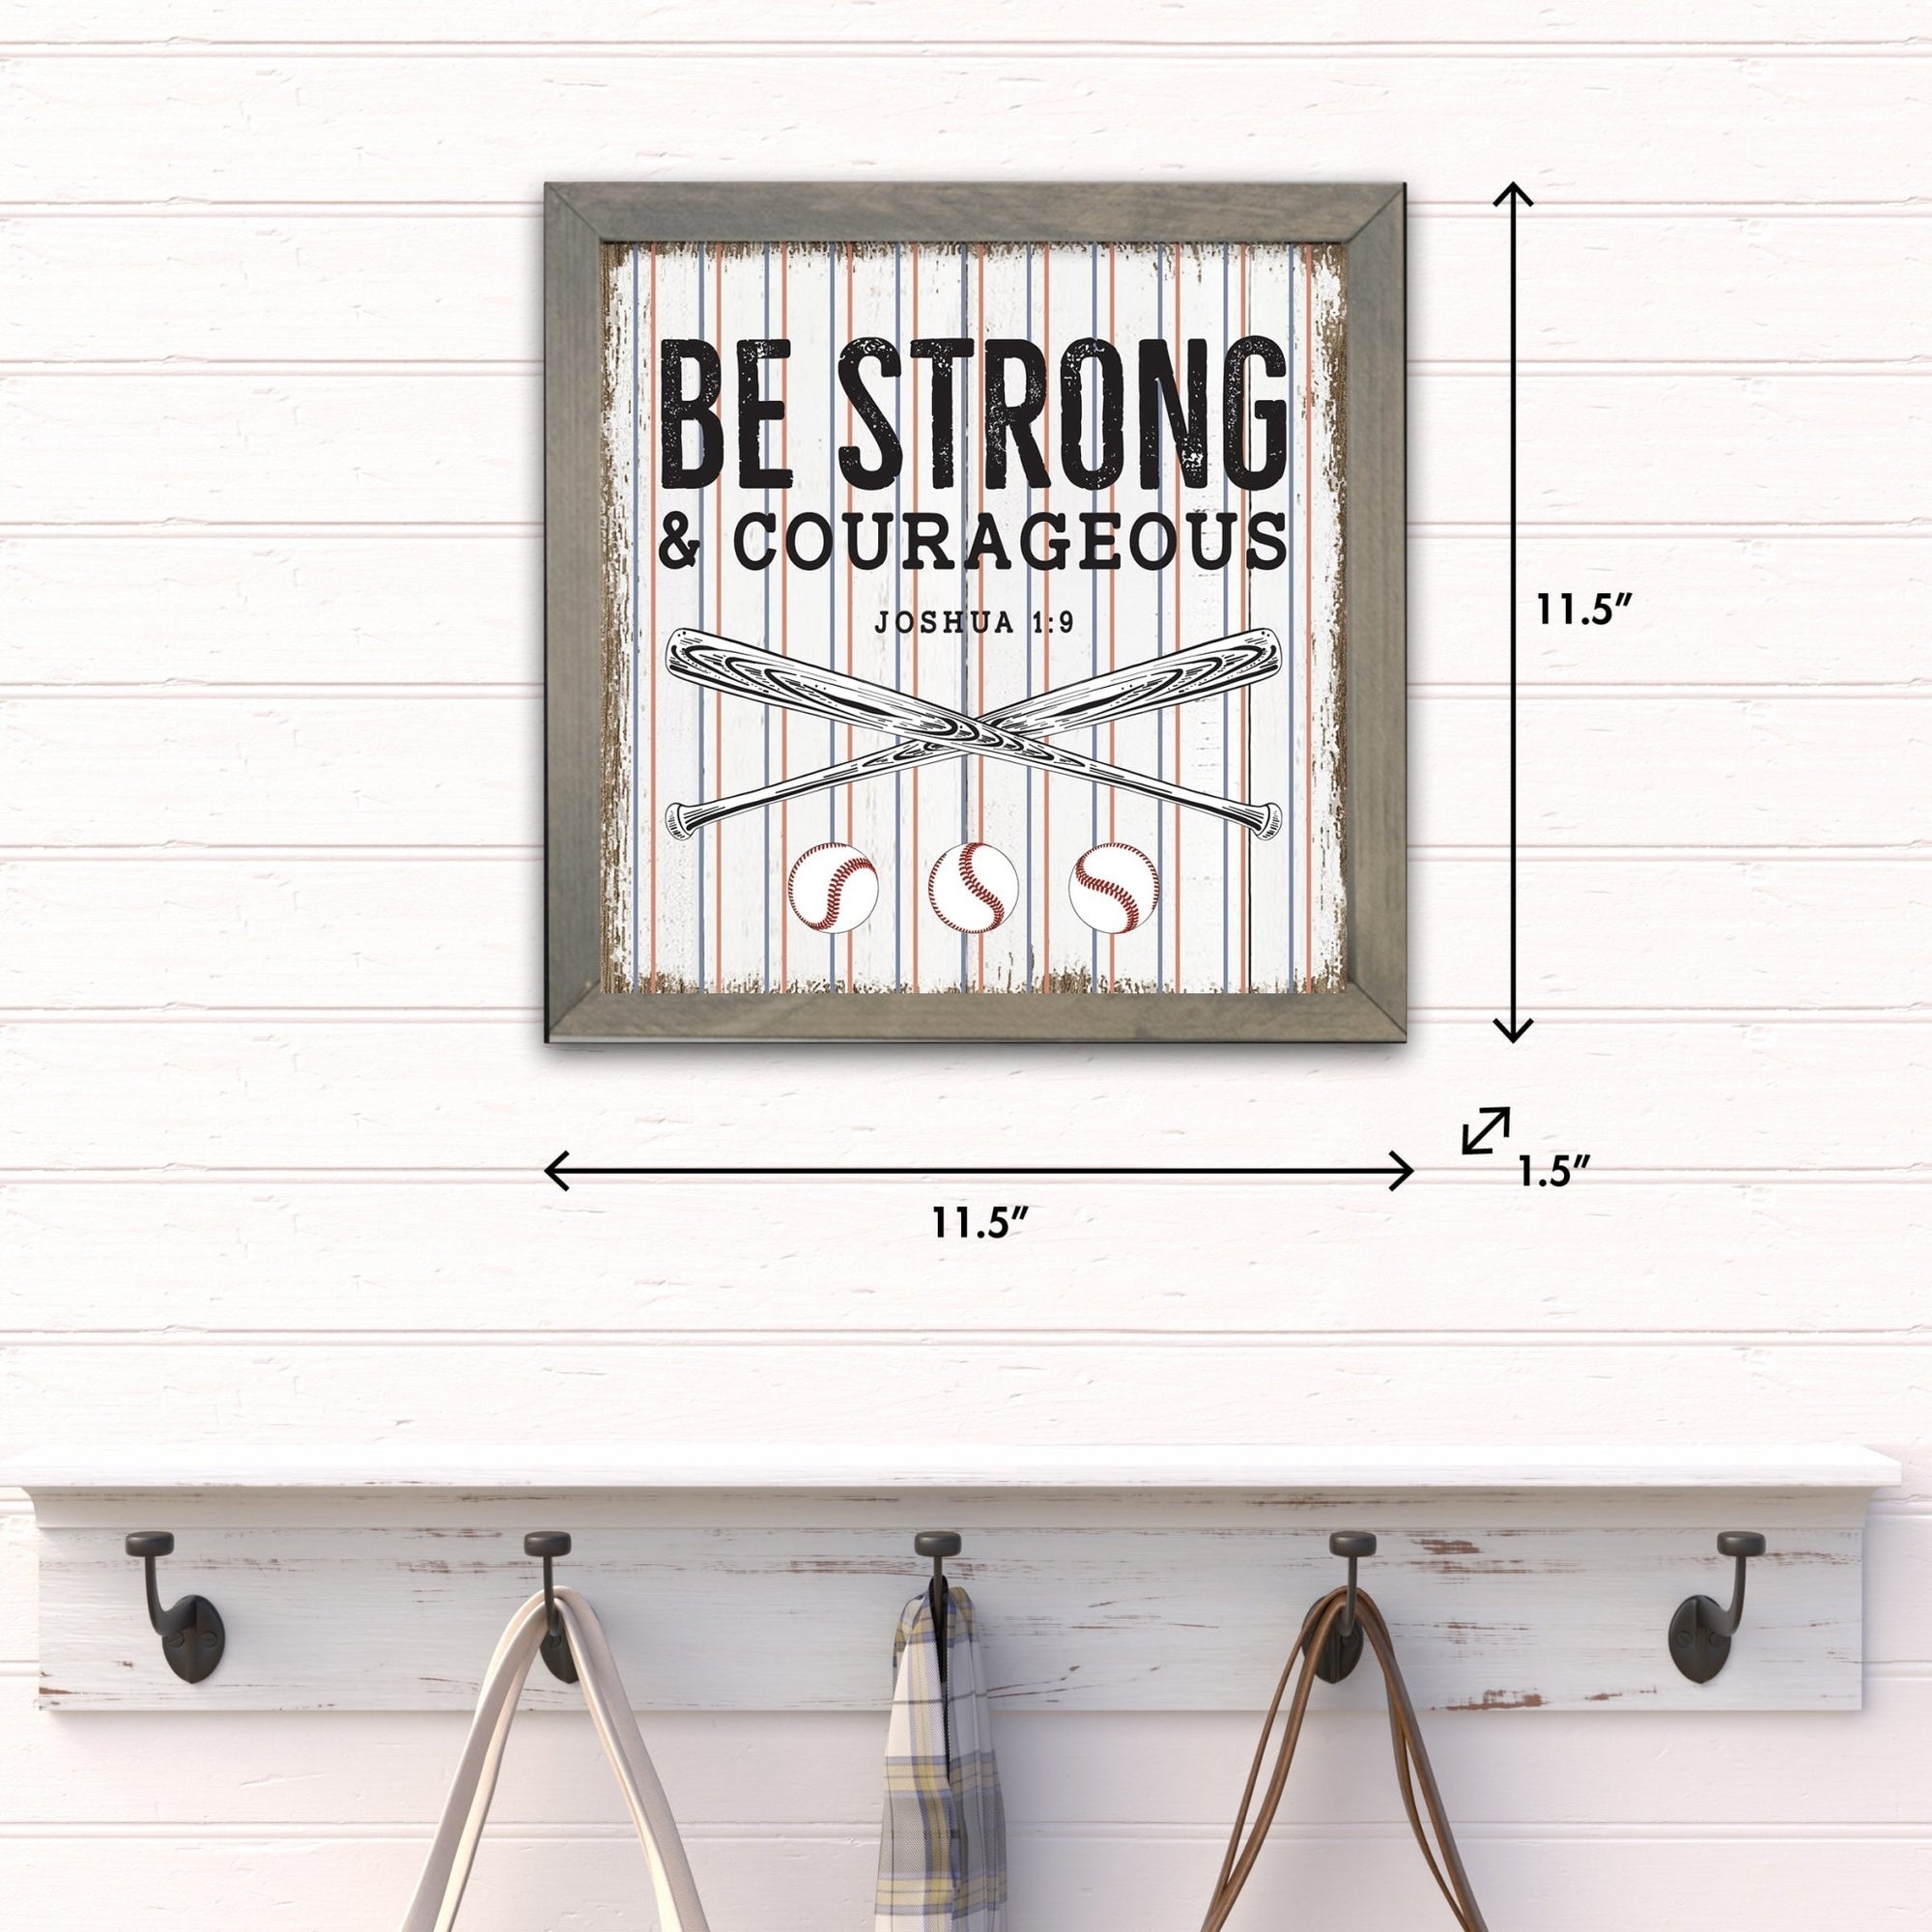 Elegant Baseball Framed Shadow Box Shelf Décor With Inspiring Bible Verses - Be Strong - LifeSong Milestones